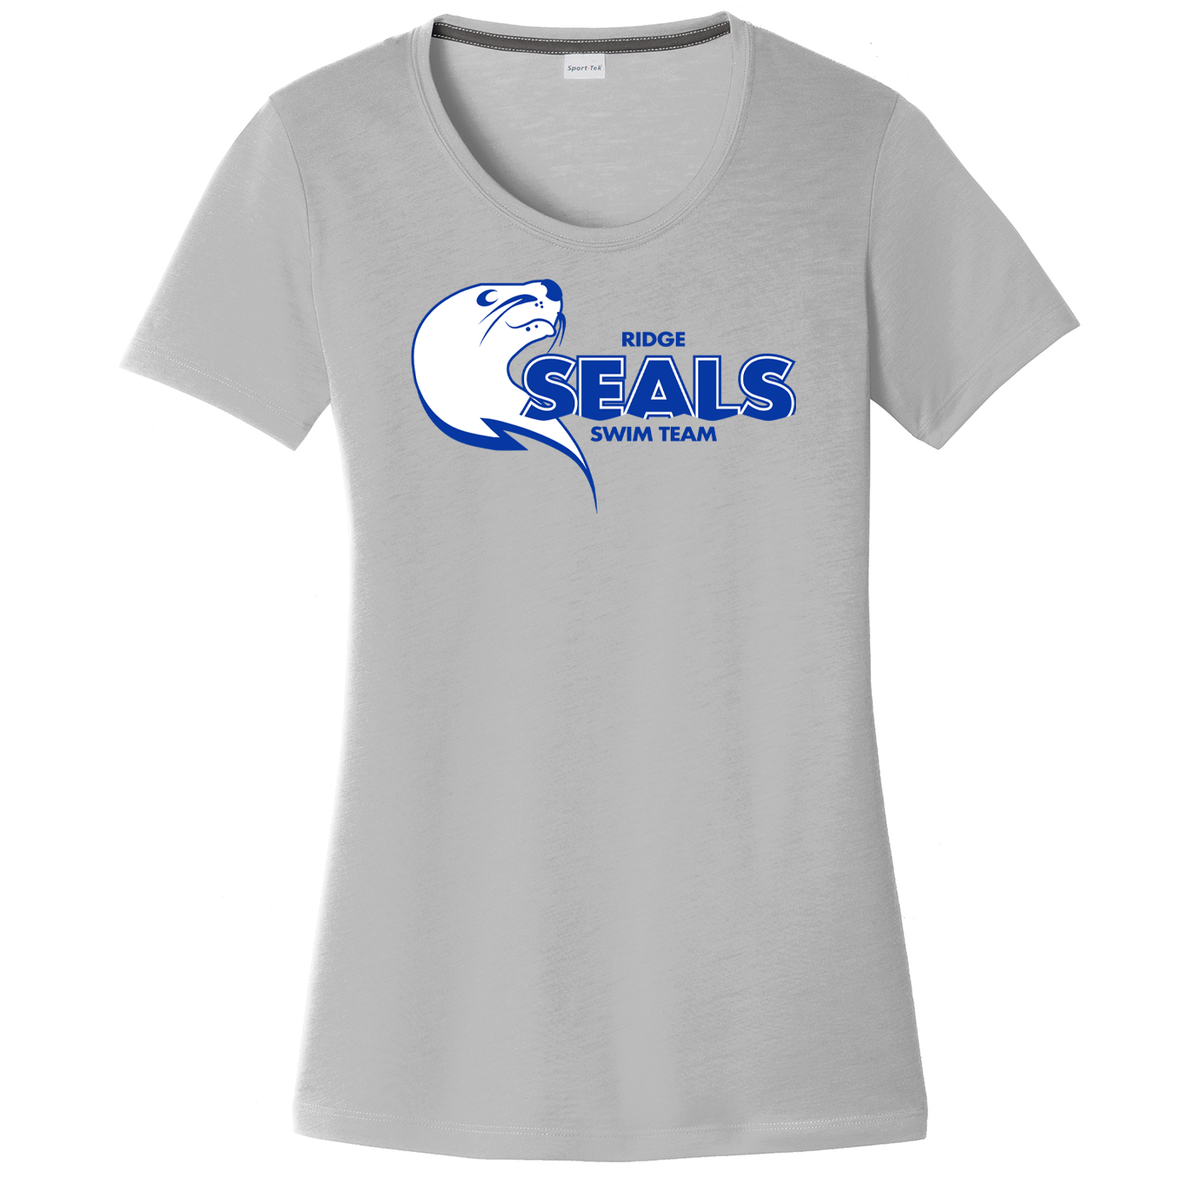 Ridge Seals Swim Team Women's CottonTouch Performance T-Shirt